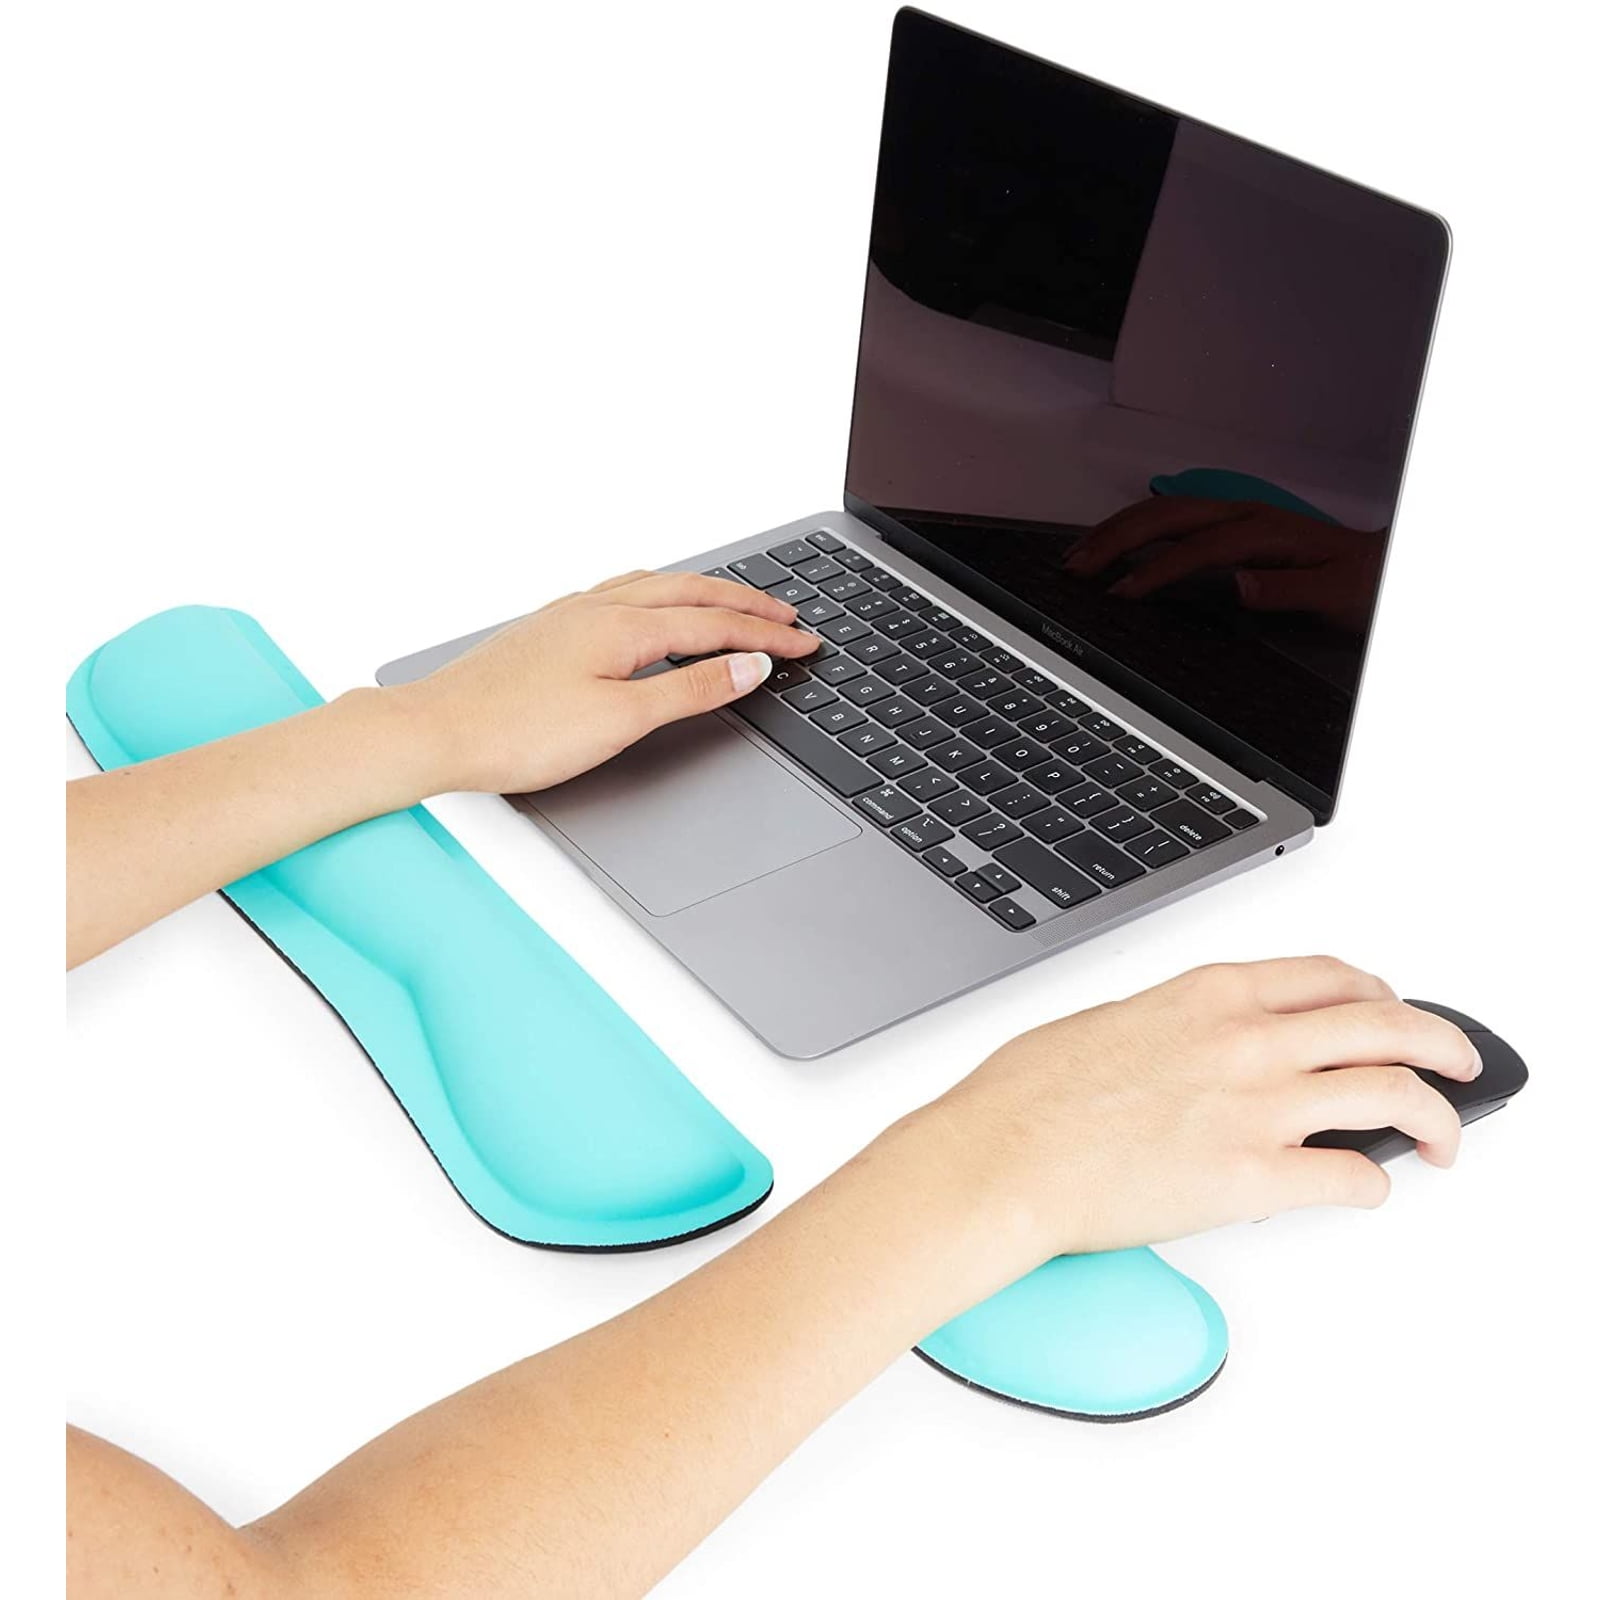 Wrist Strain Comfort Raised Support for Handwriting Typing Keyboard SEN 